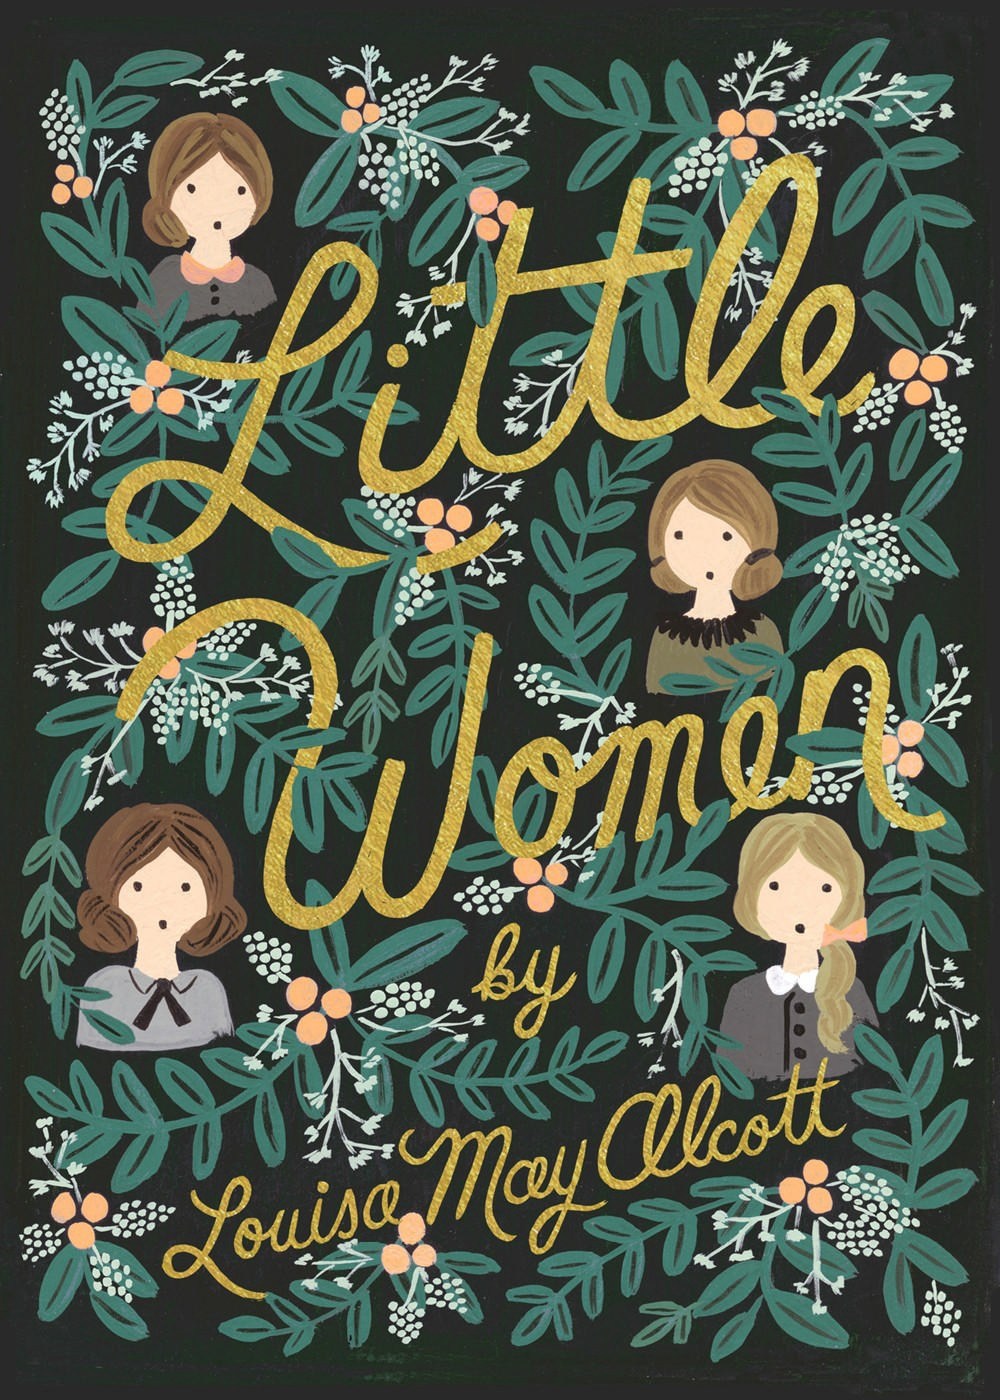 Little Women, by Louisa May Alcott - interesting book to read